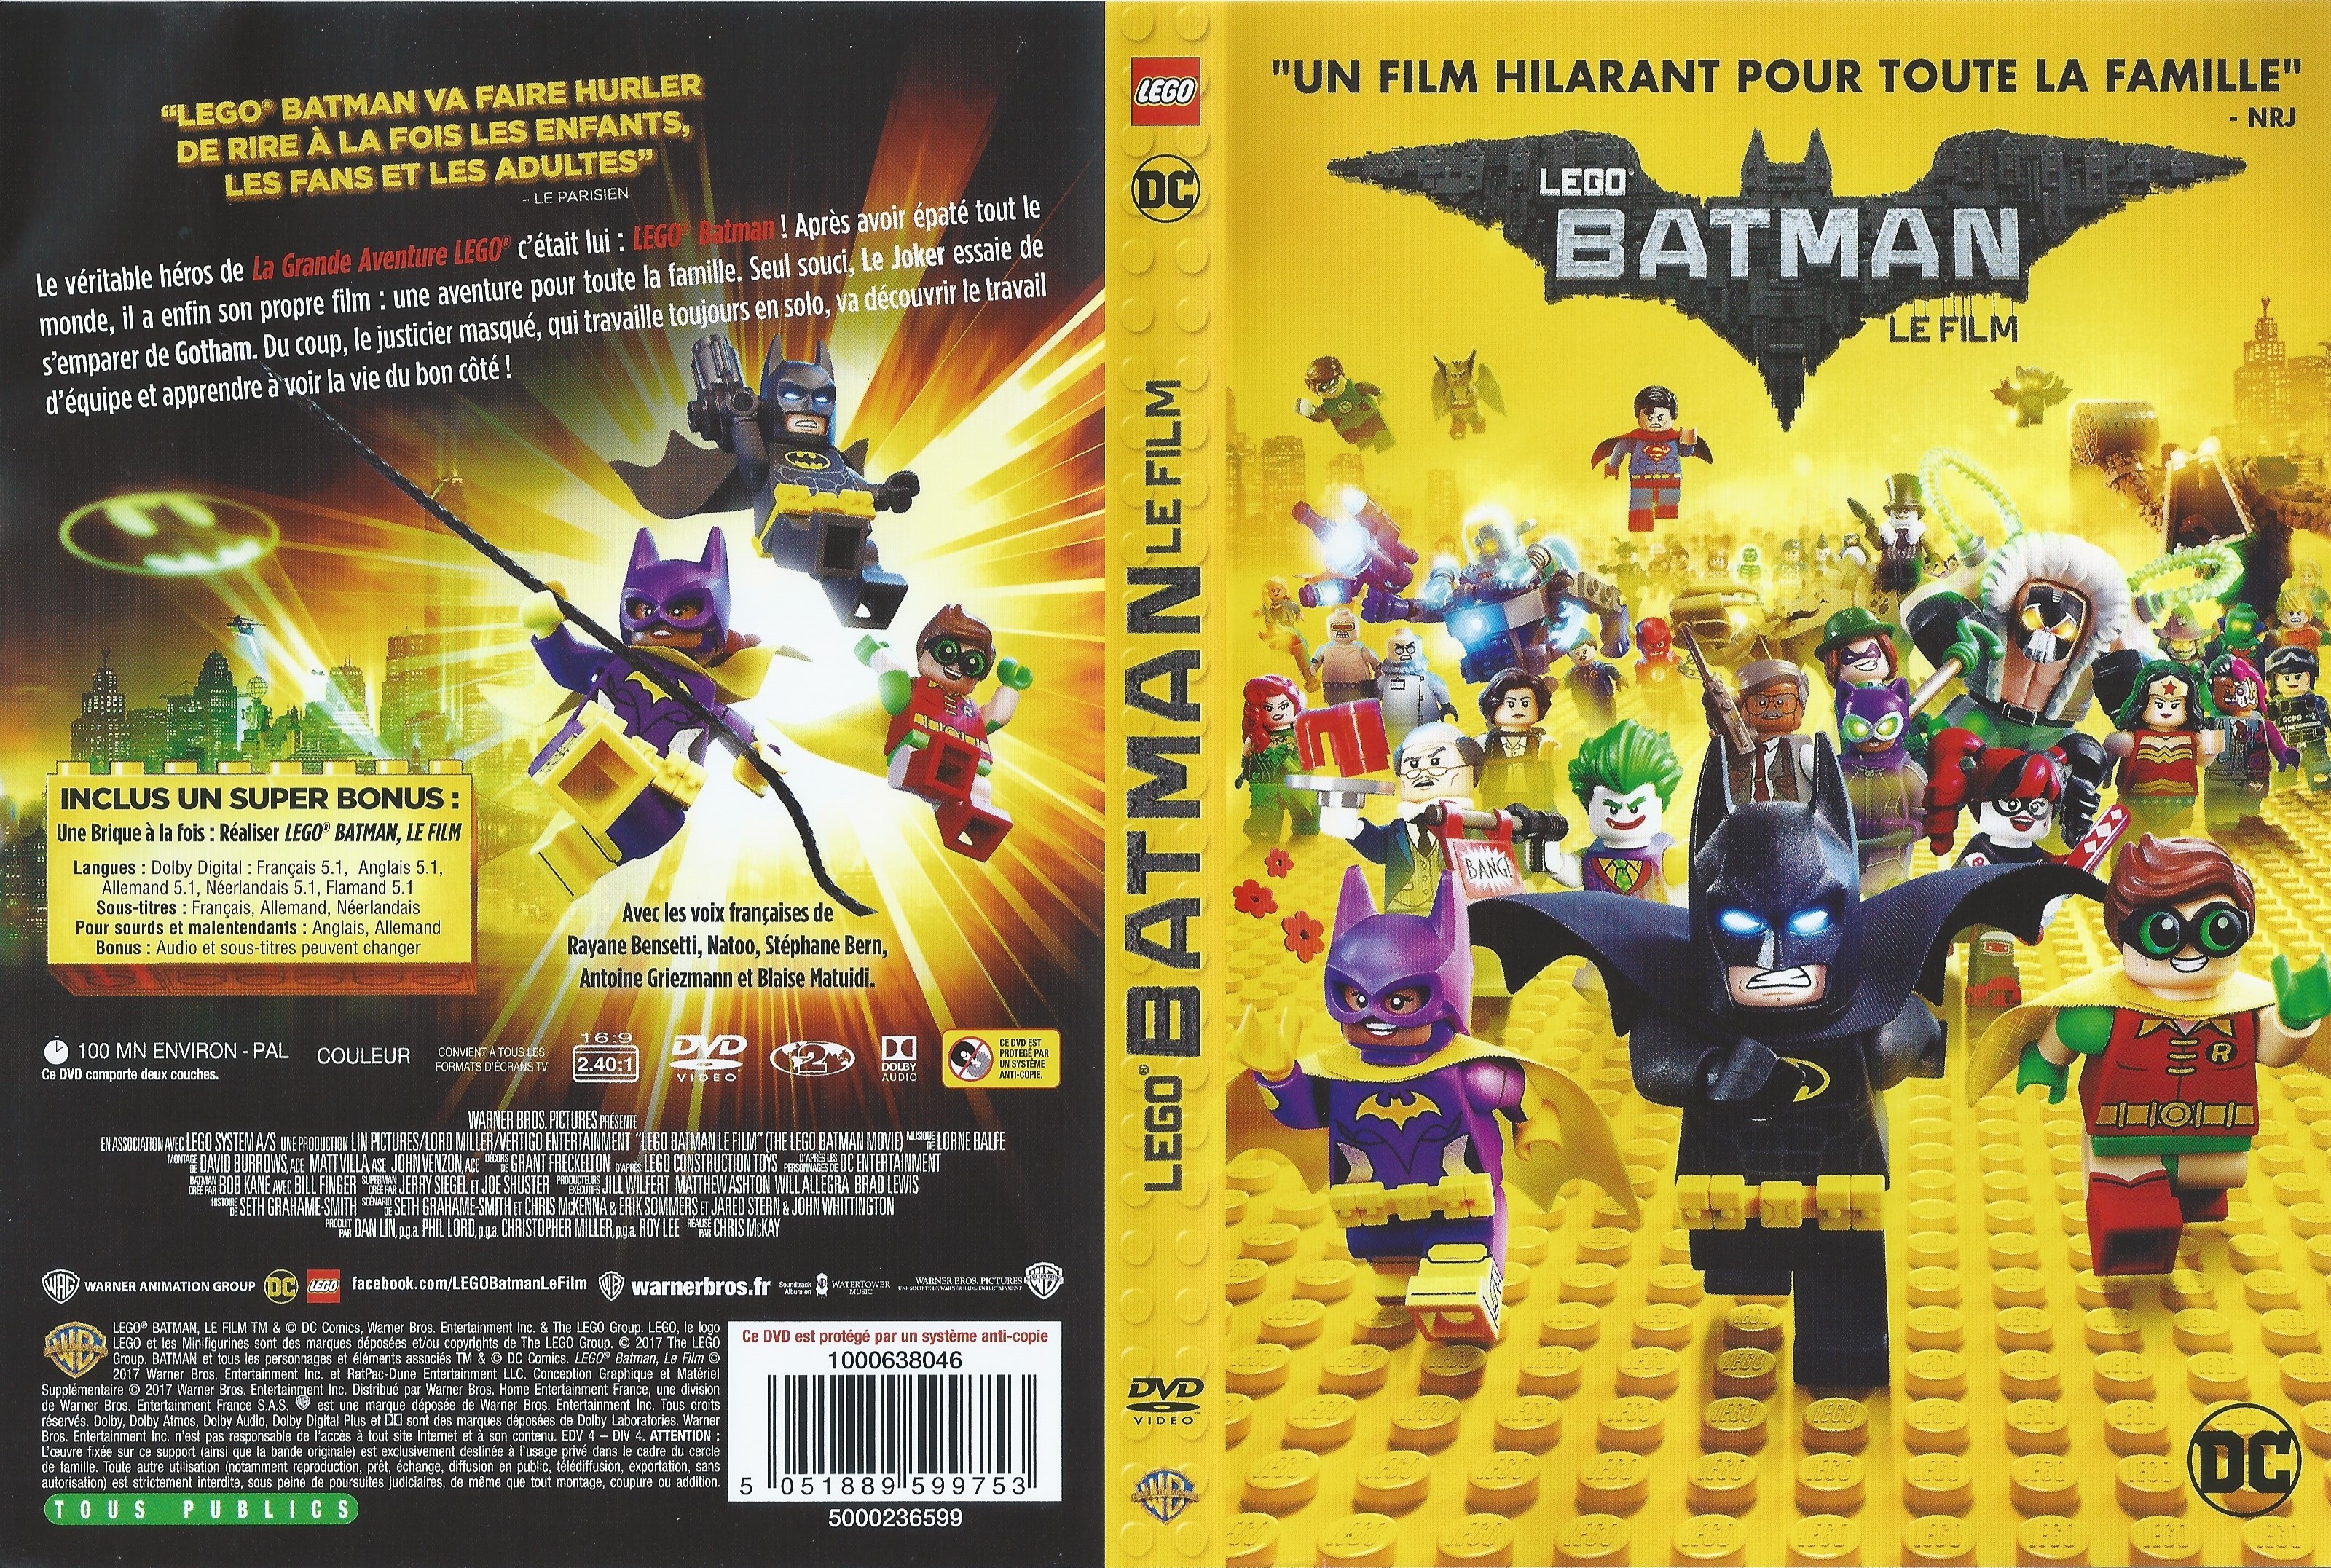 Jaquette DVD LEGO Batman le film v2